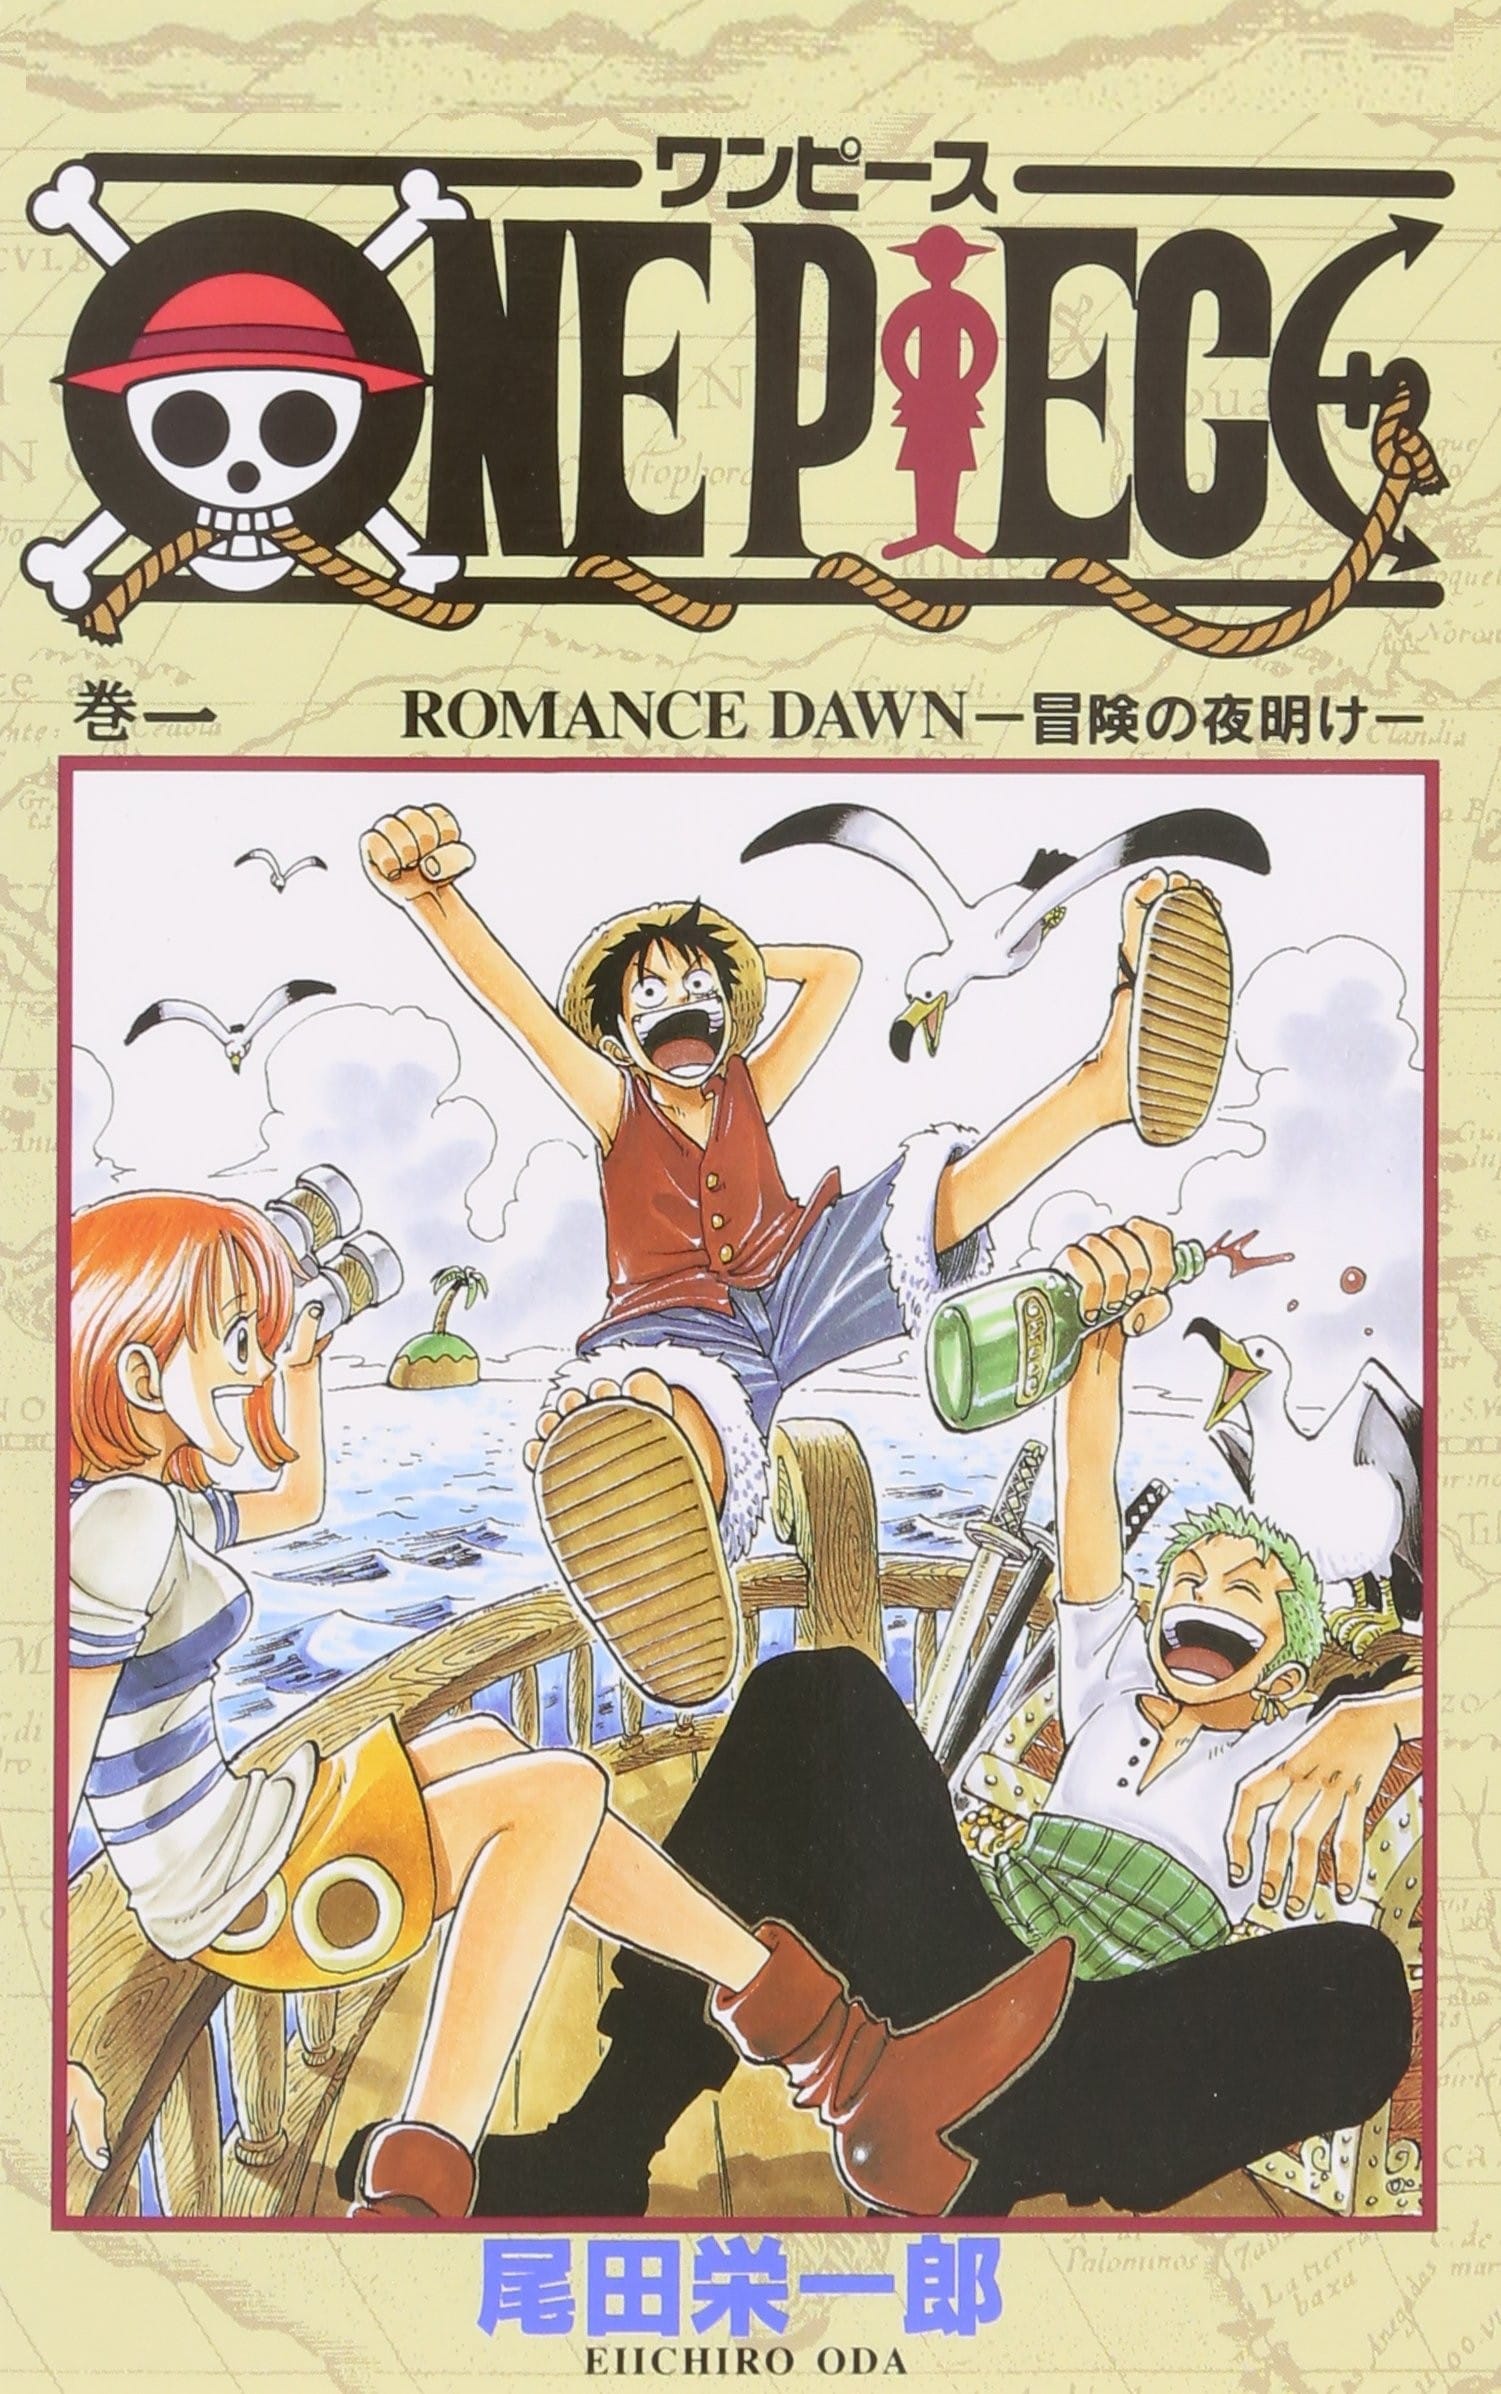 One Piece - Đảo Hải Tặc